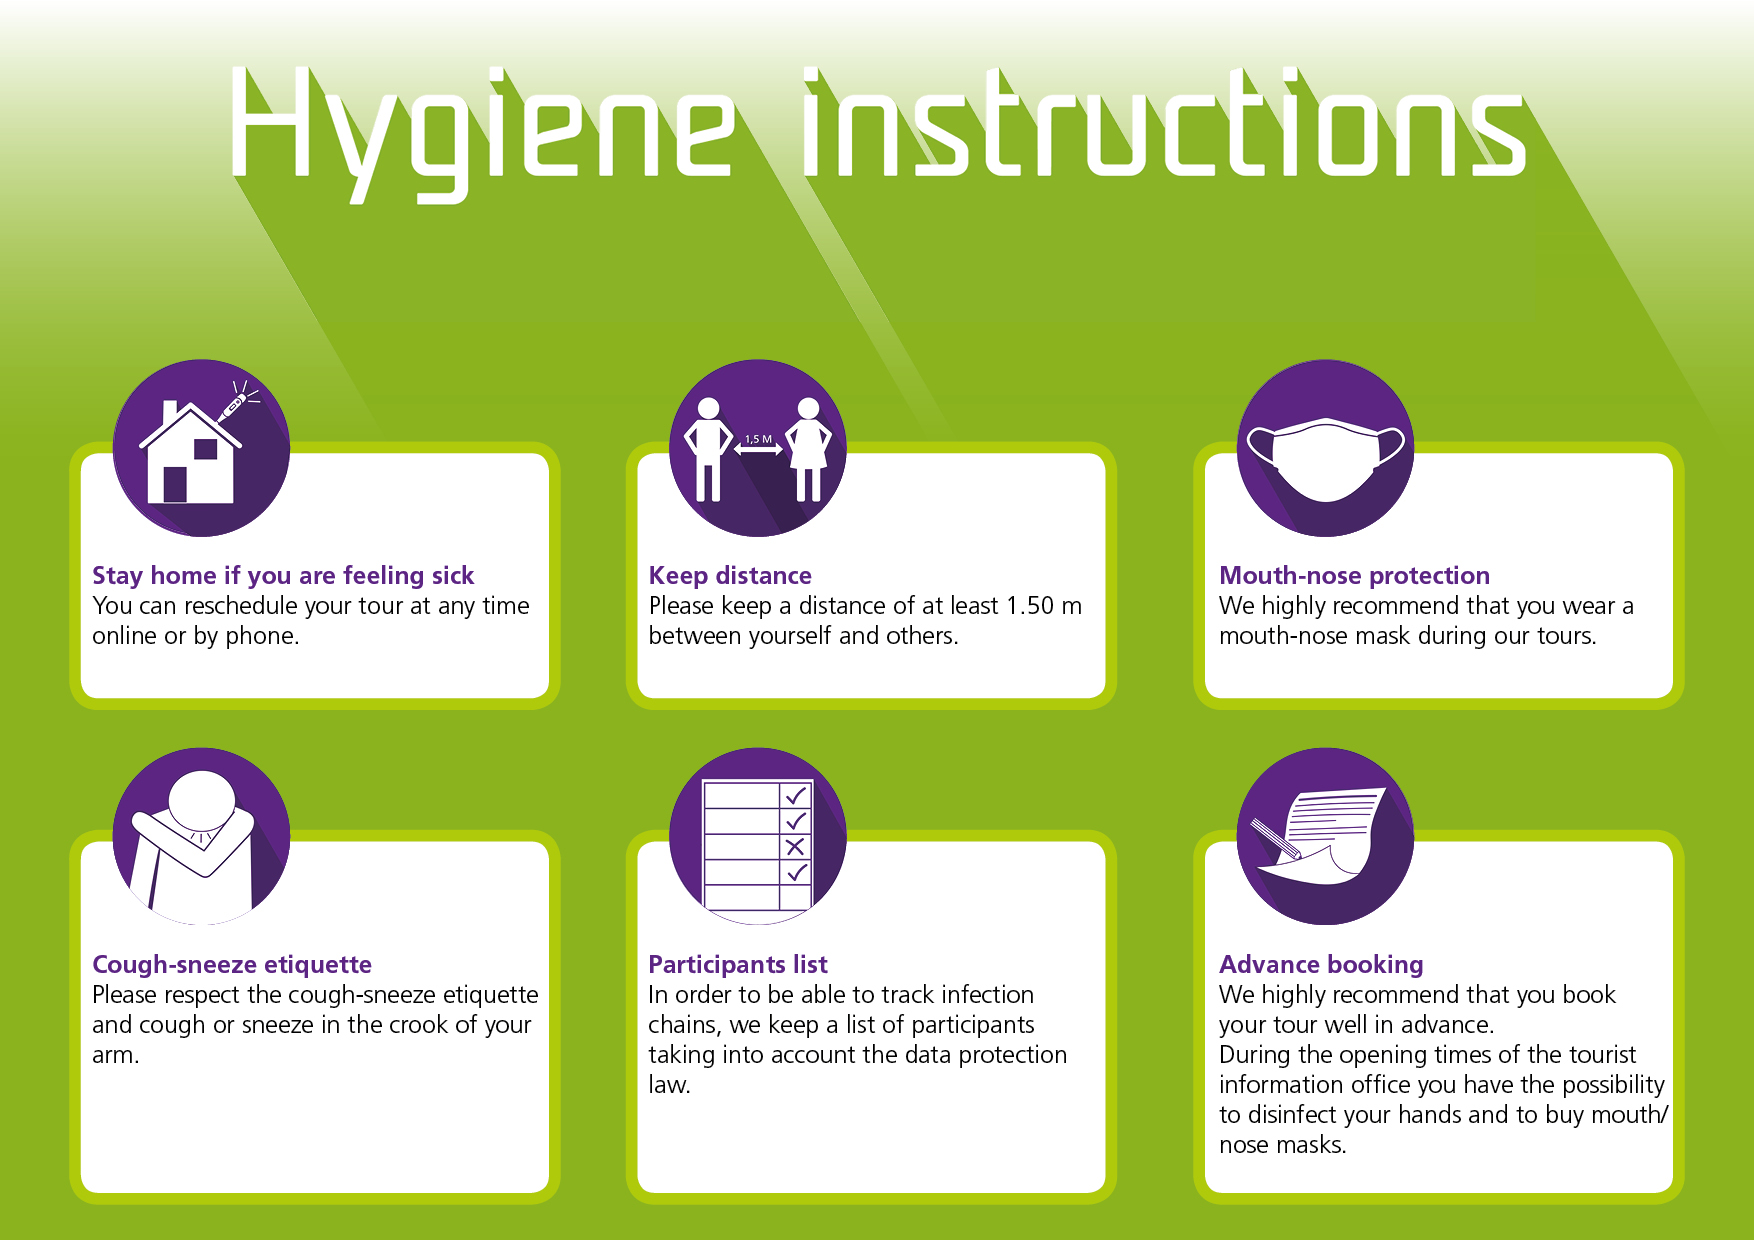 Hygiene Instructions Tours